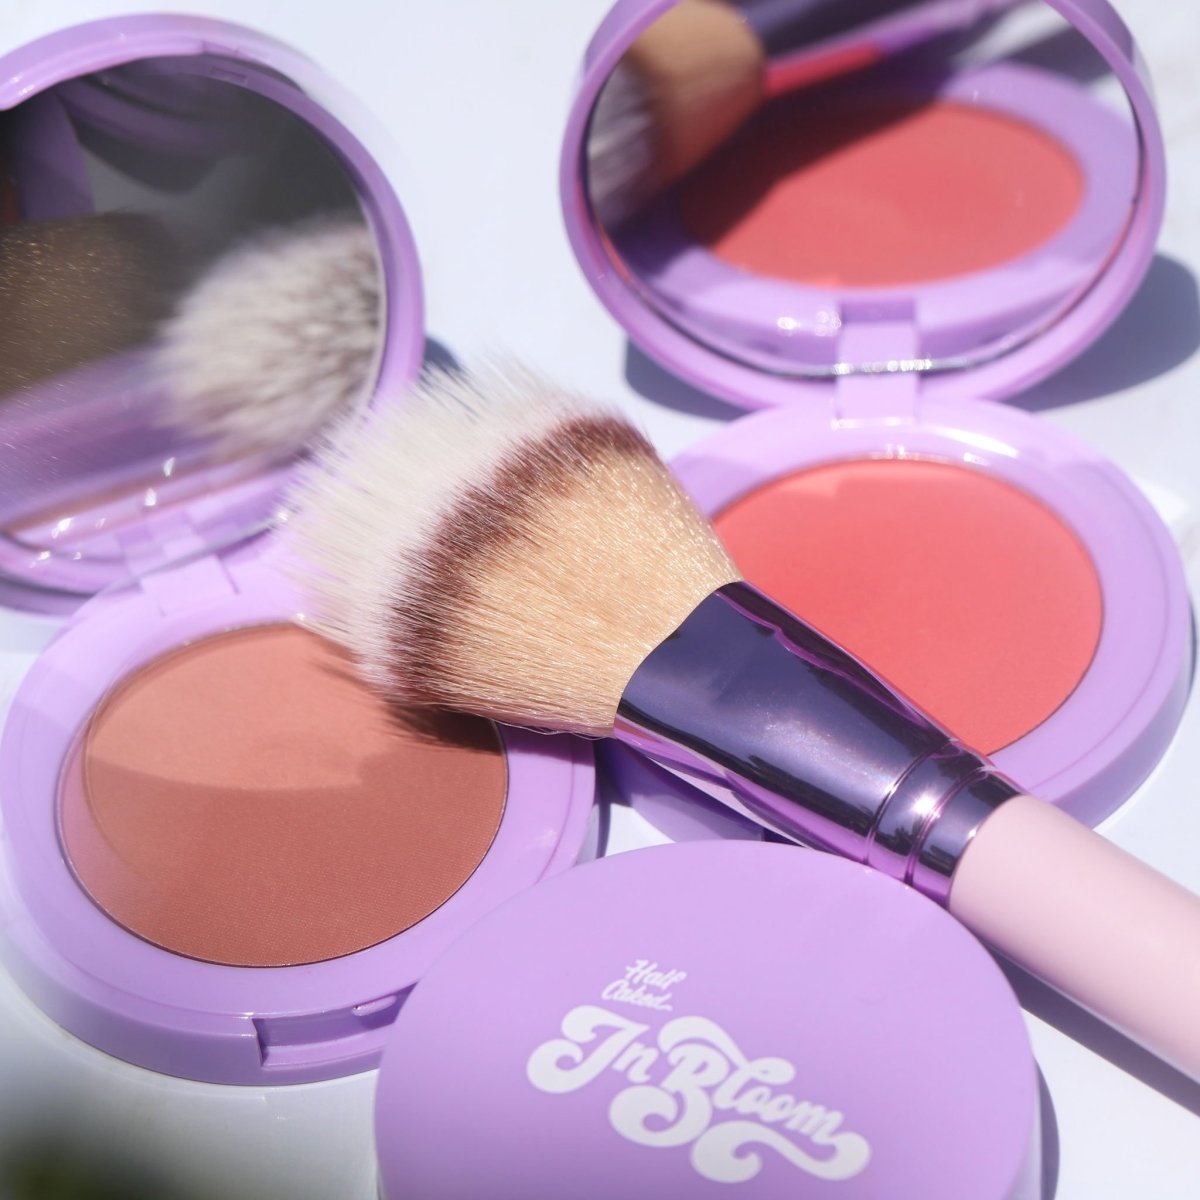 shiny purple blush brush on purple compact with mirror - duo fiber brush - half caked makeup